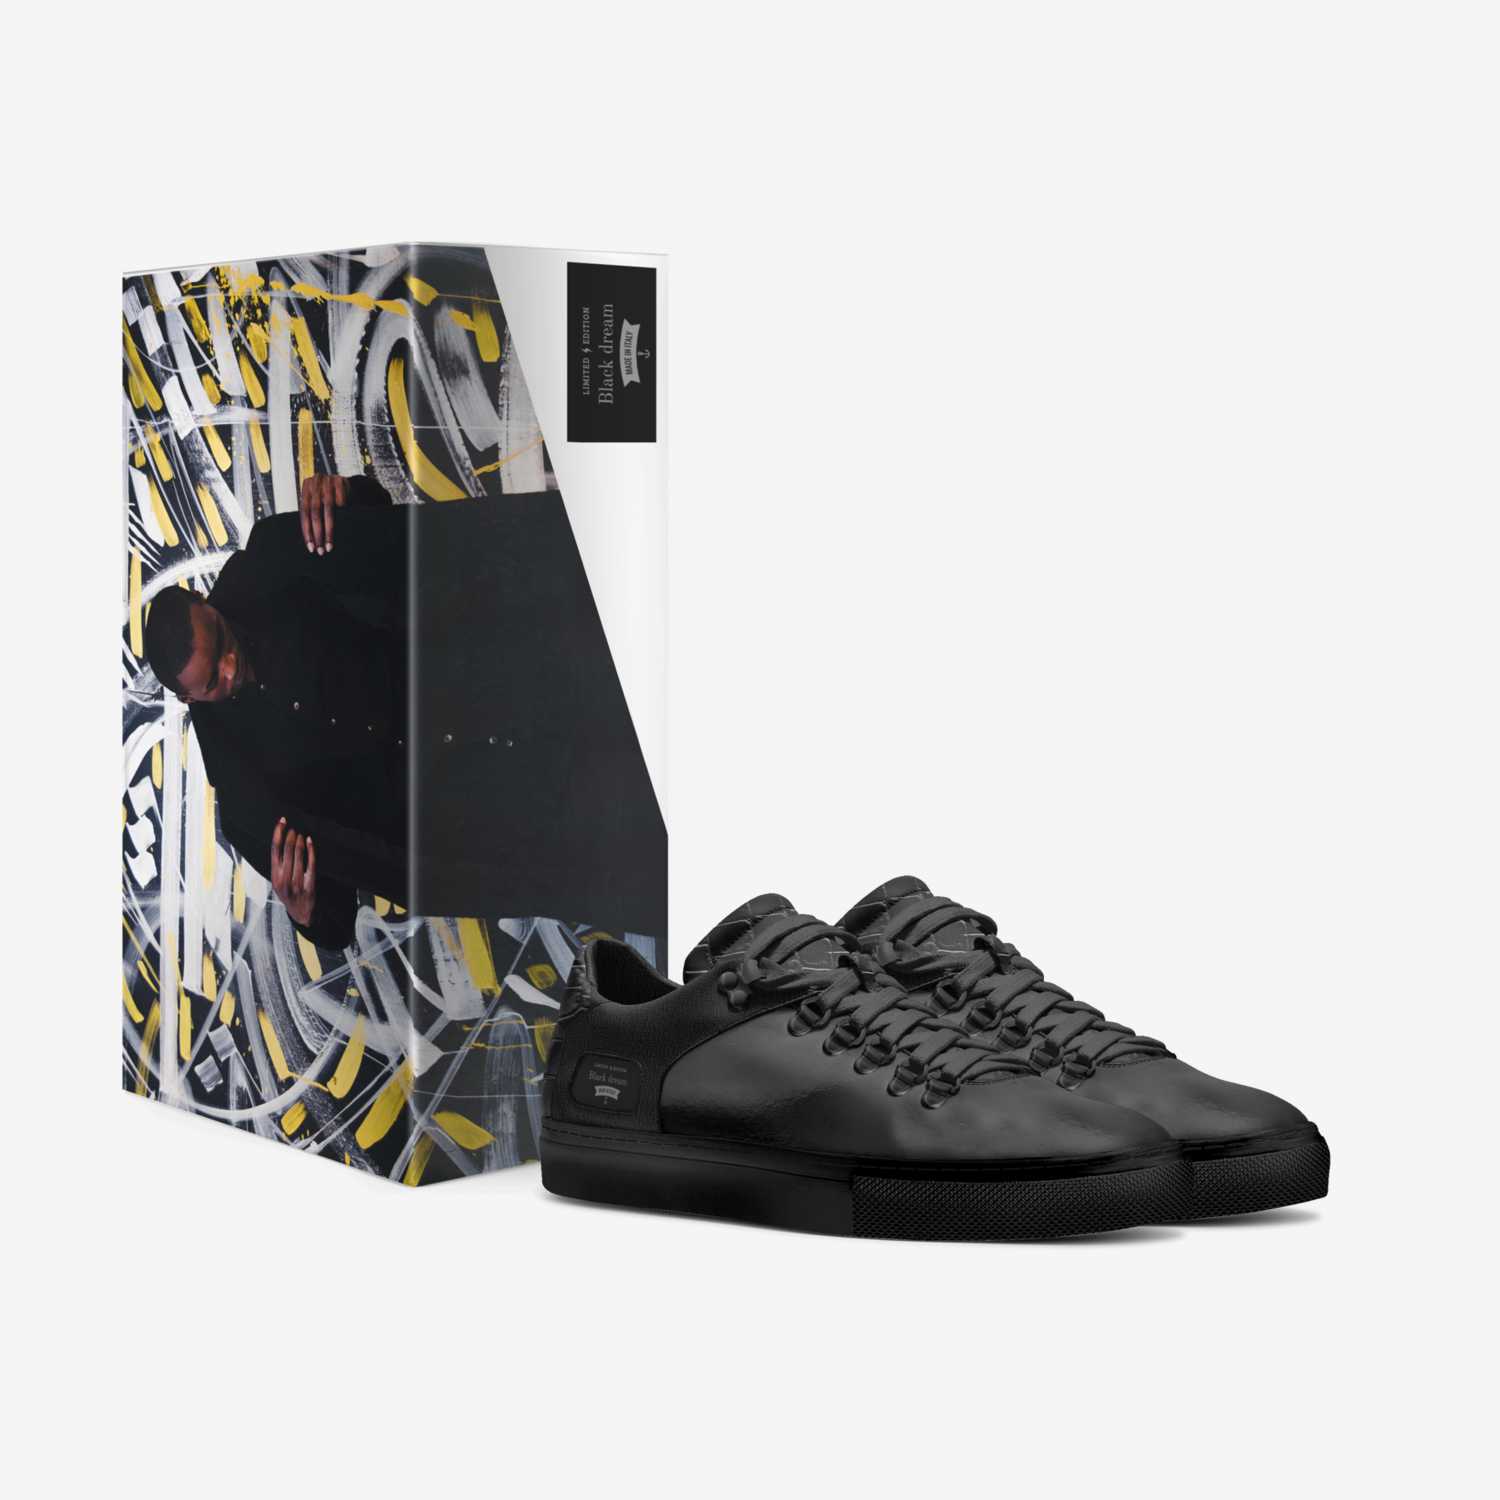 Black dream custom made in Italy shoes by Nima Ghalandari | Box view